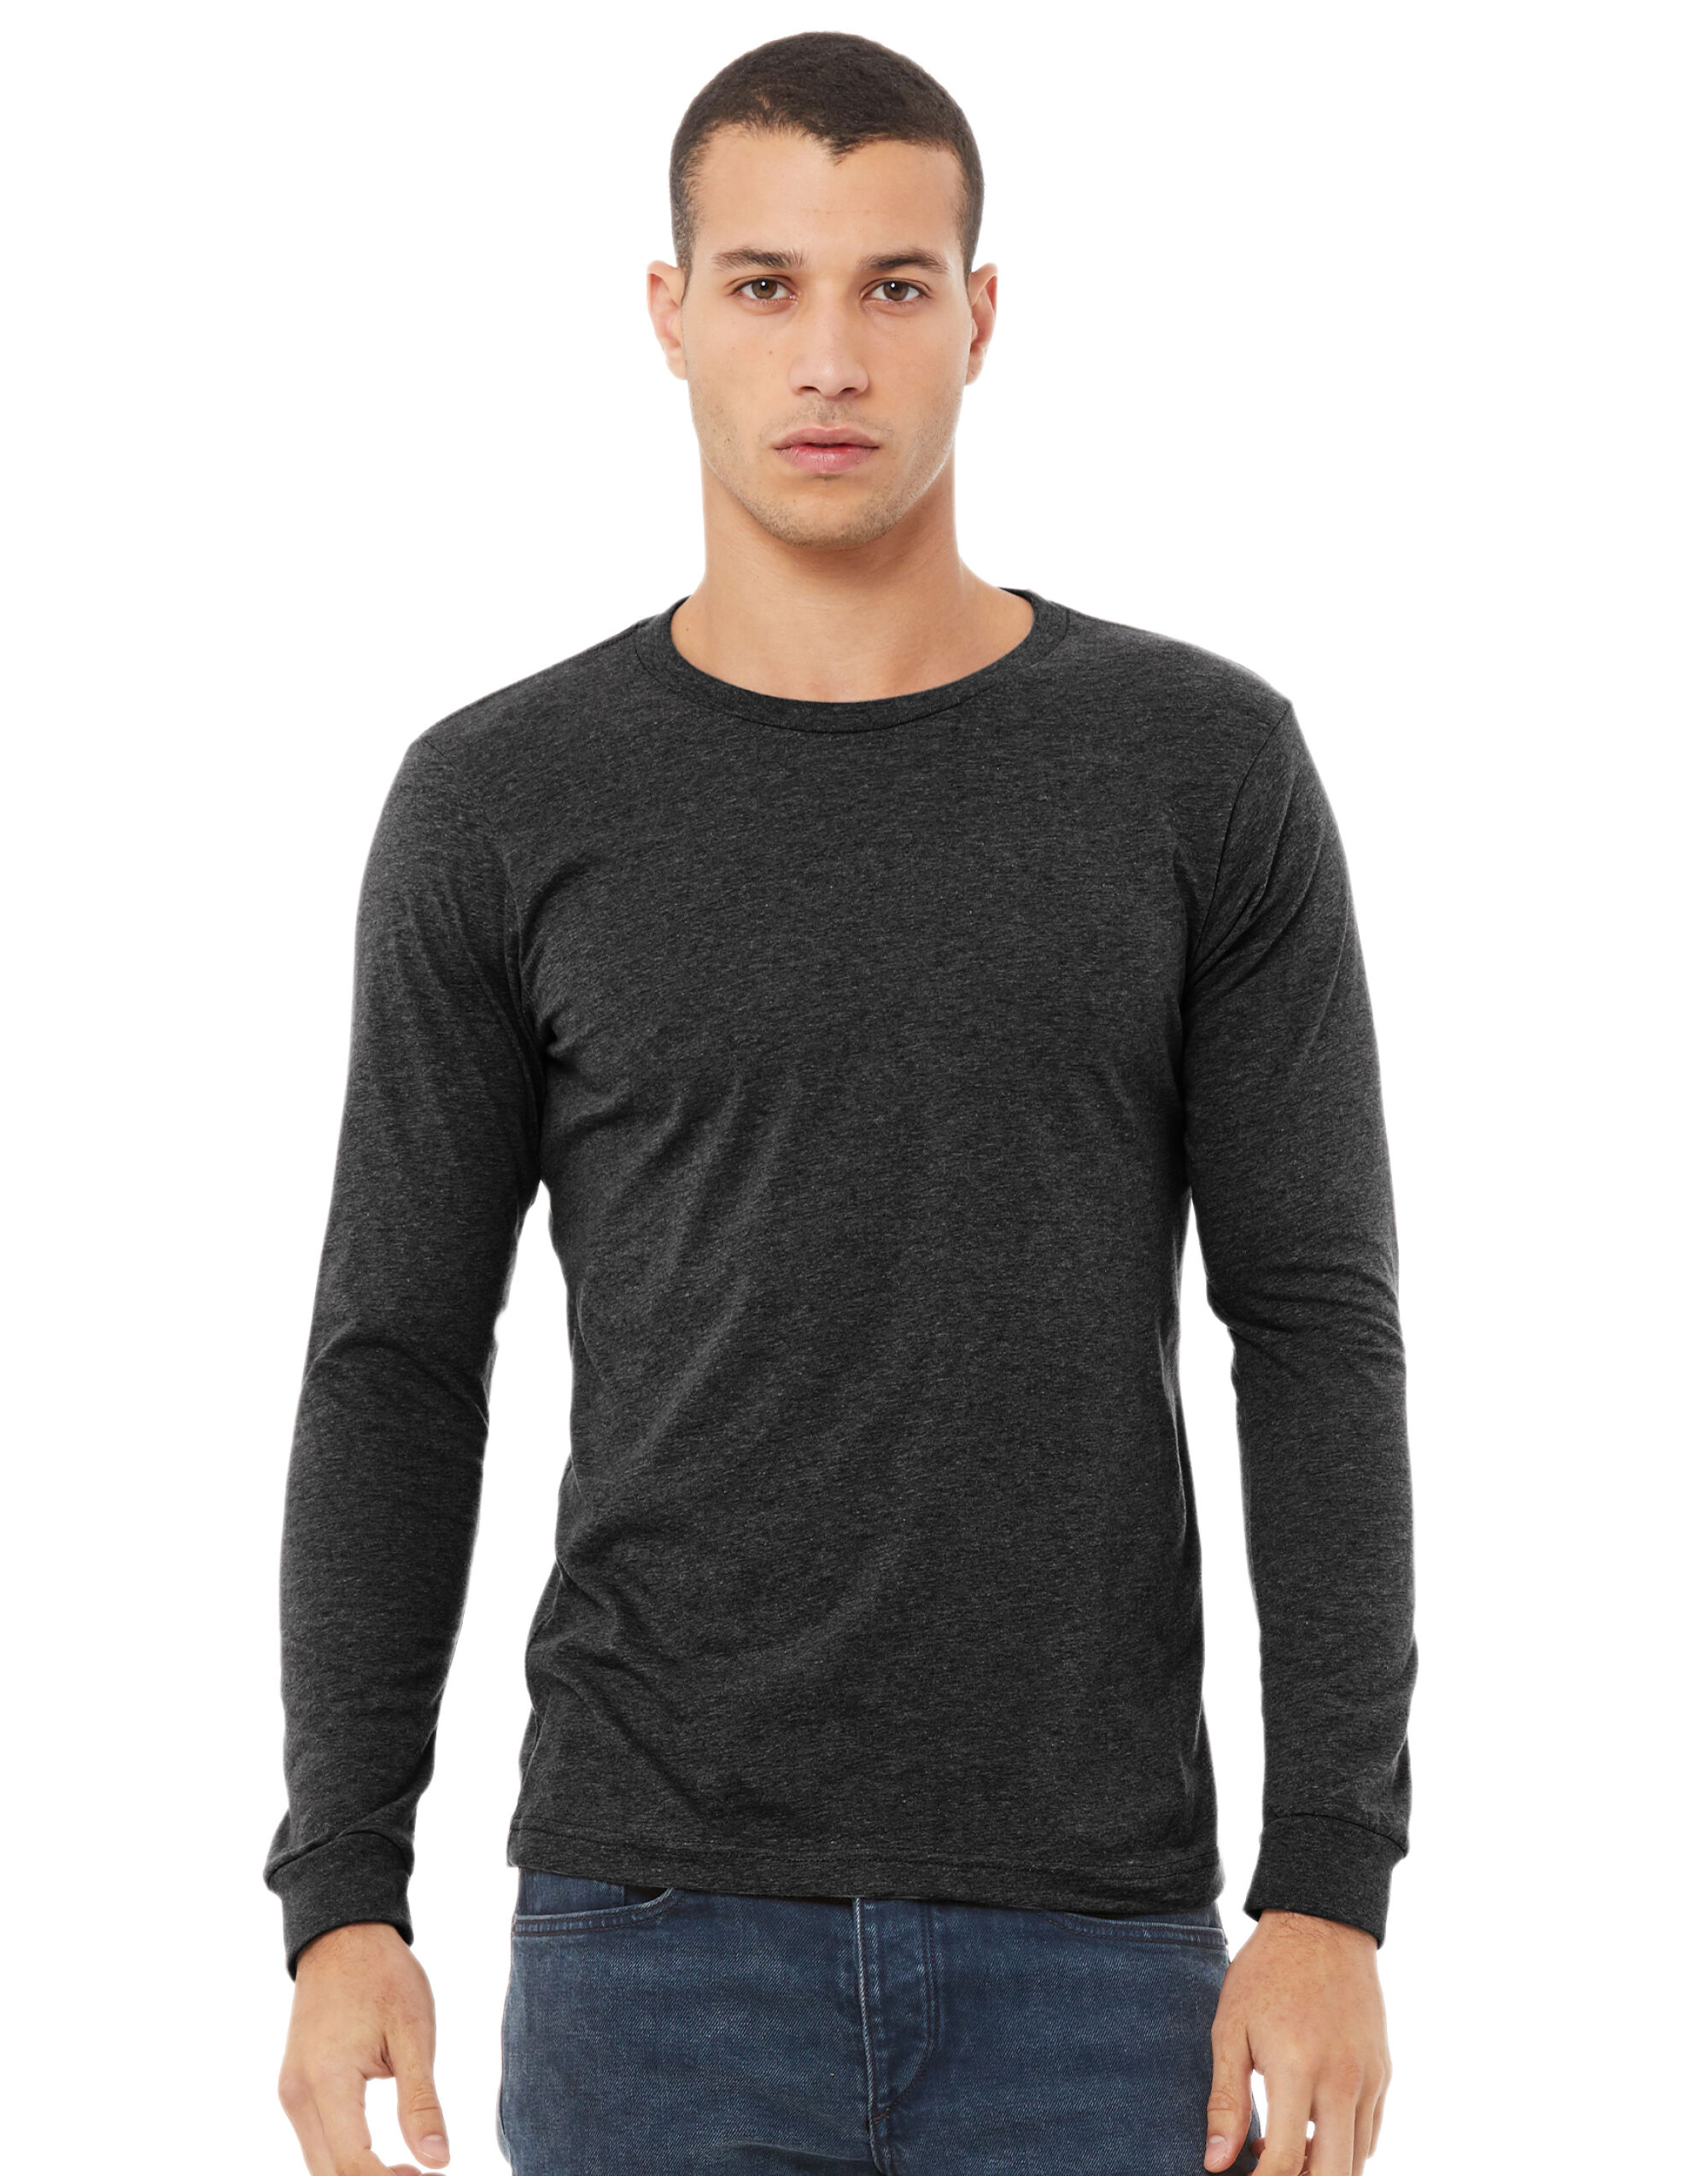 Unisex Long Sleeve T-shirt